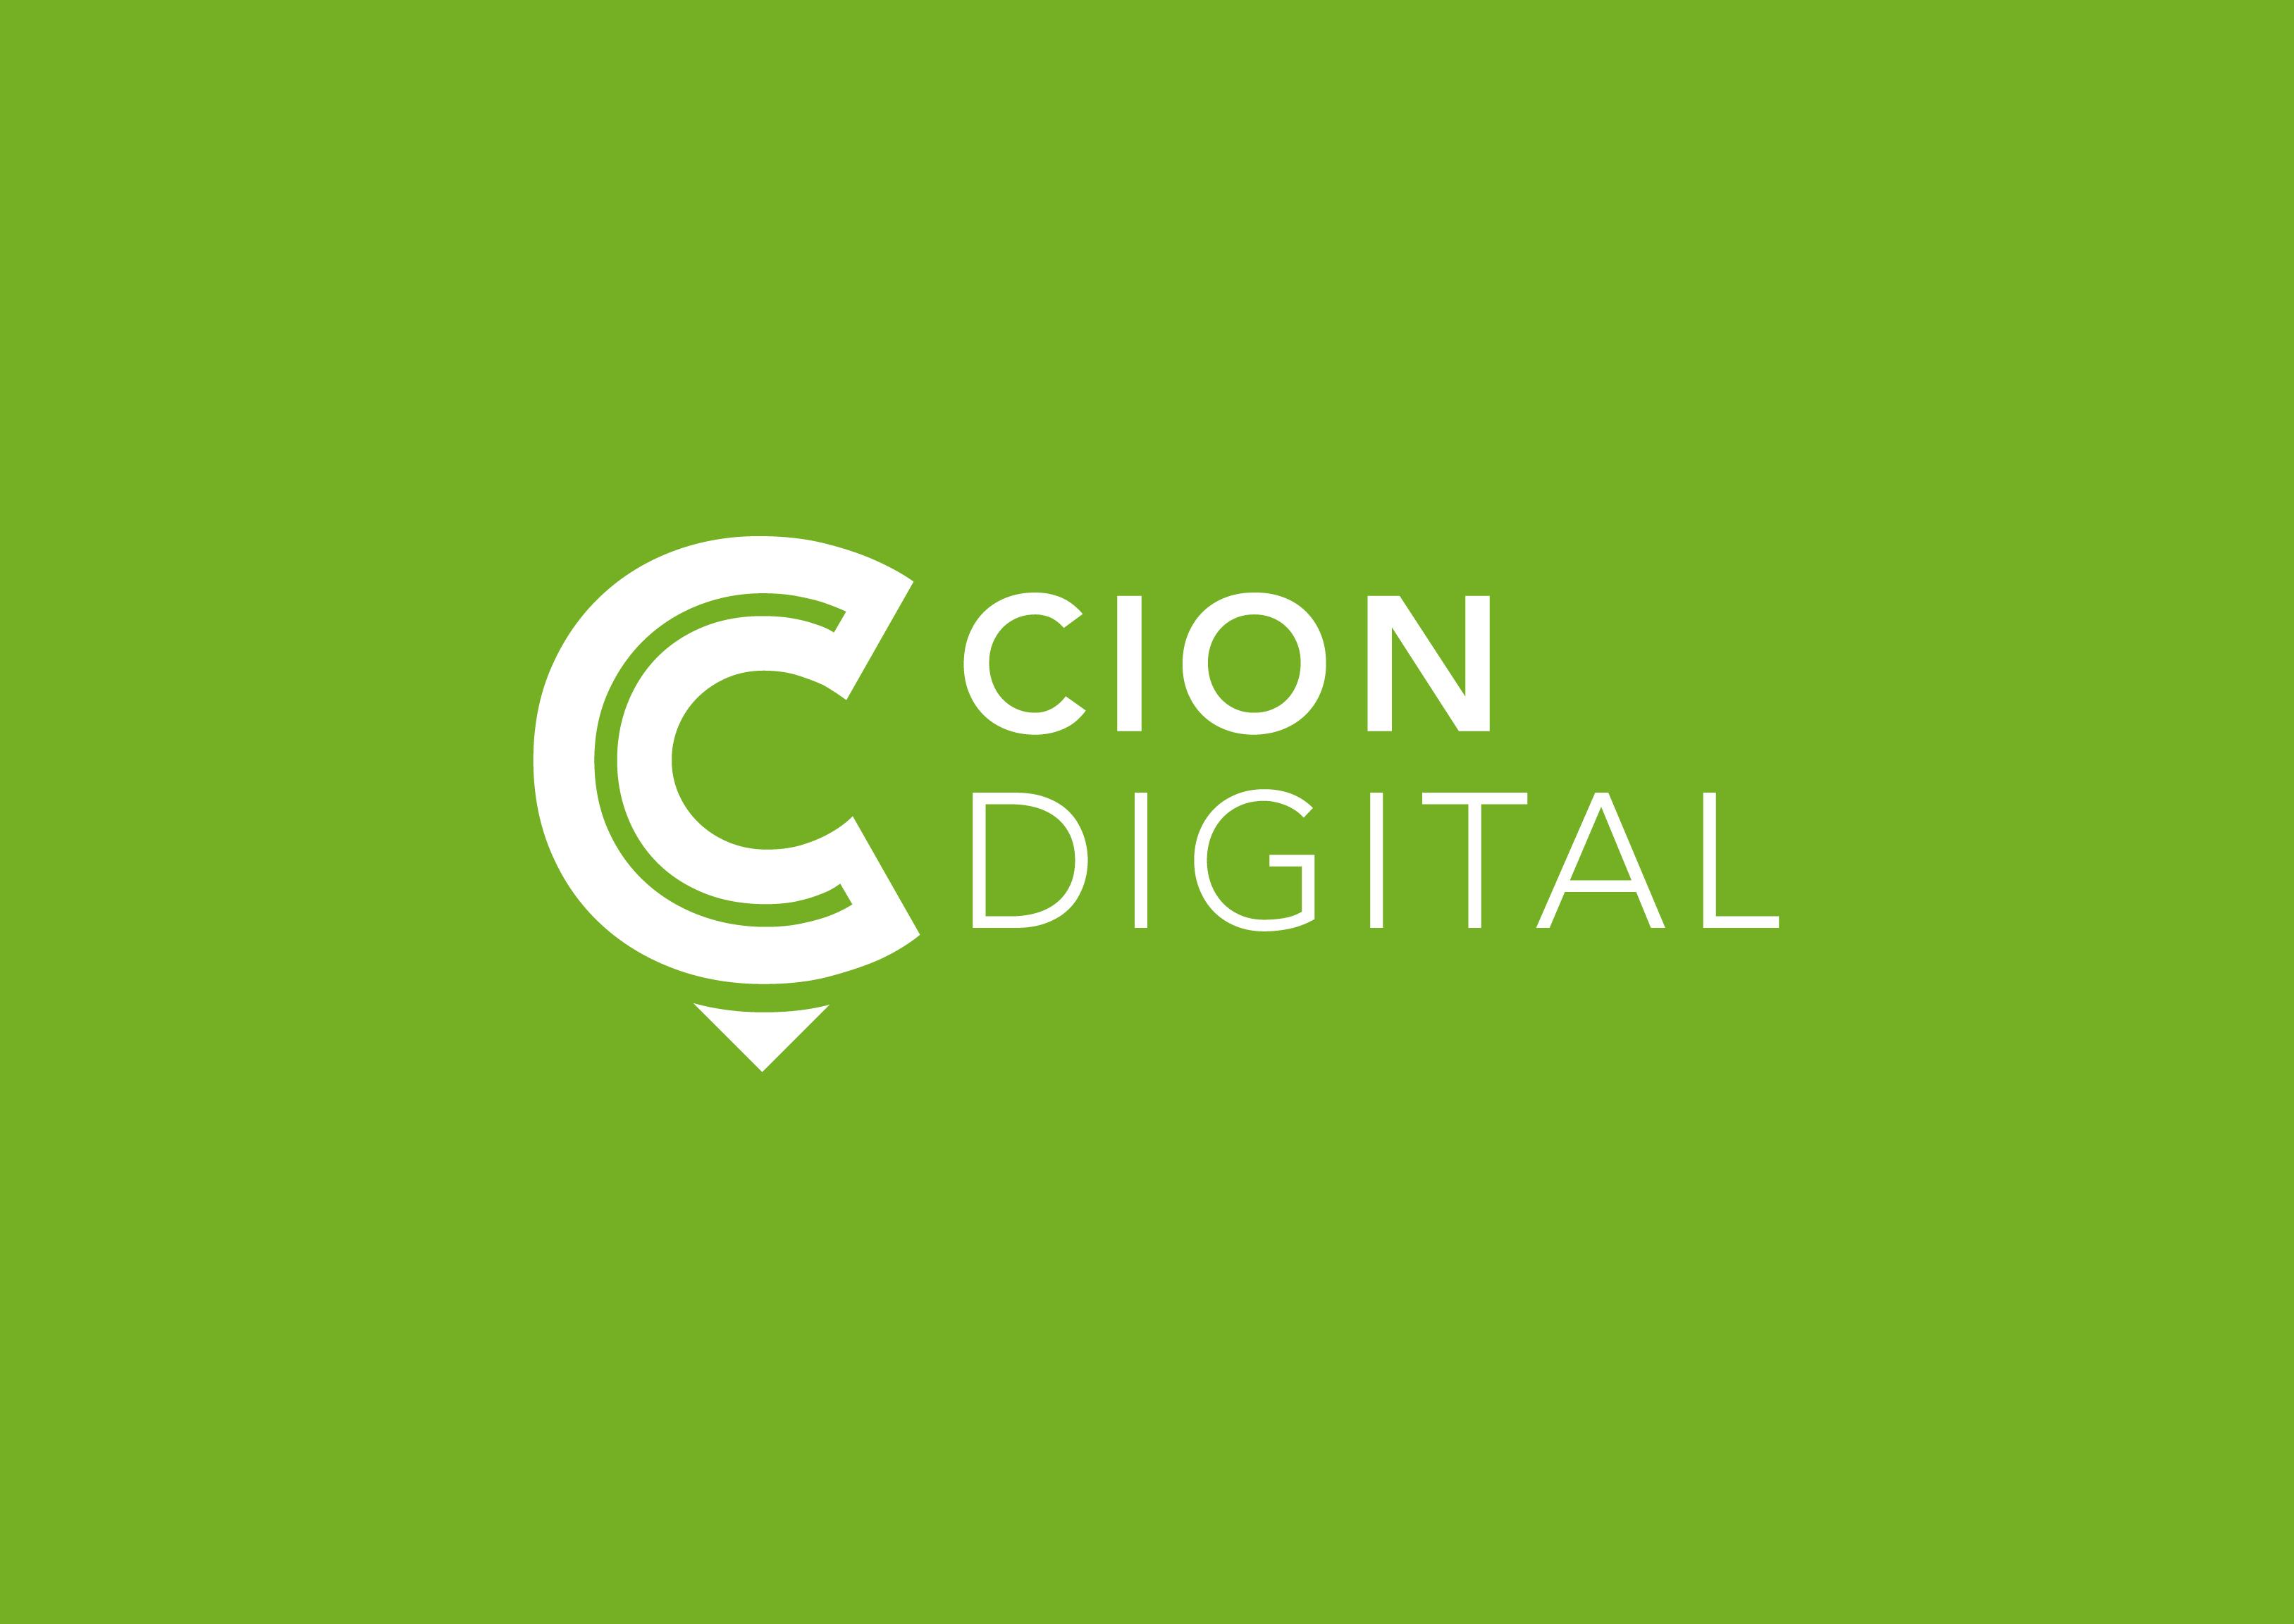 Cion Digital logo